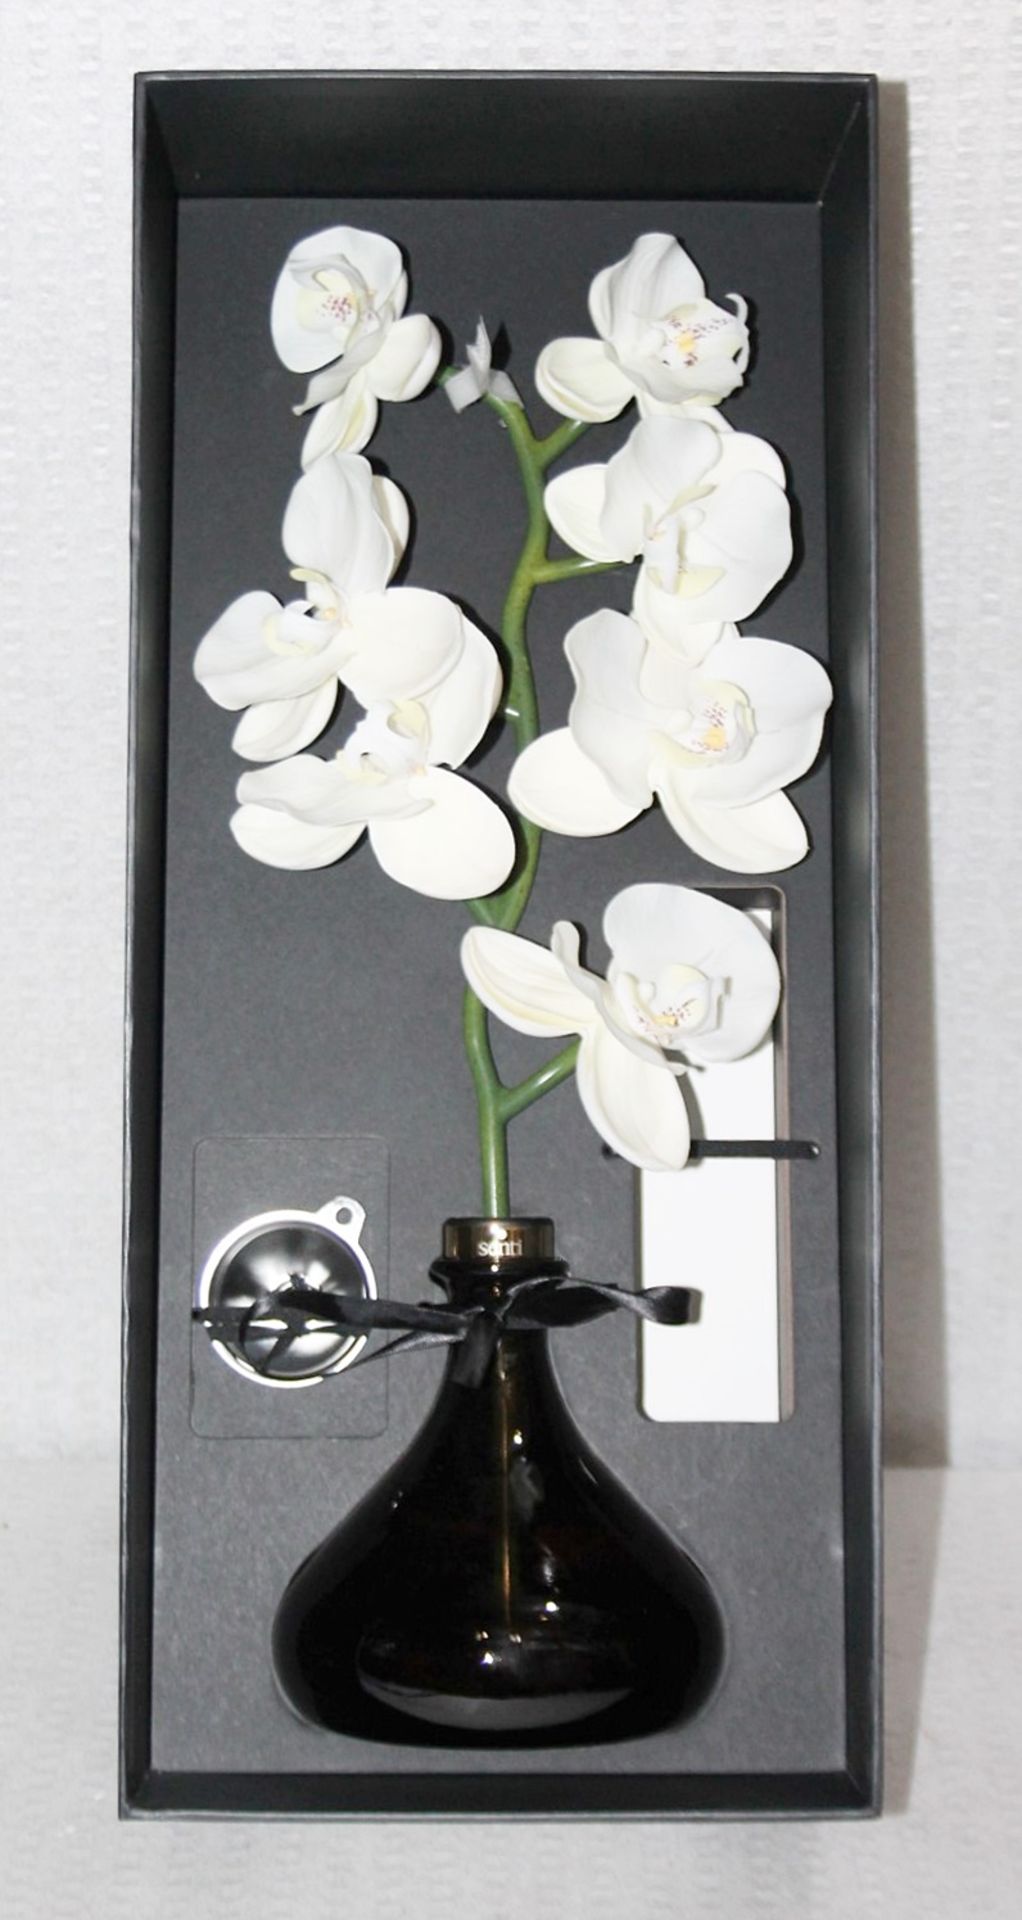 1 x SENTI 'White Flowers' Orchid Luxury Italian Glass Diffuser (250ml) - Original Price £175.00 - Image 2 of 6